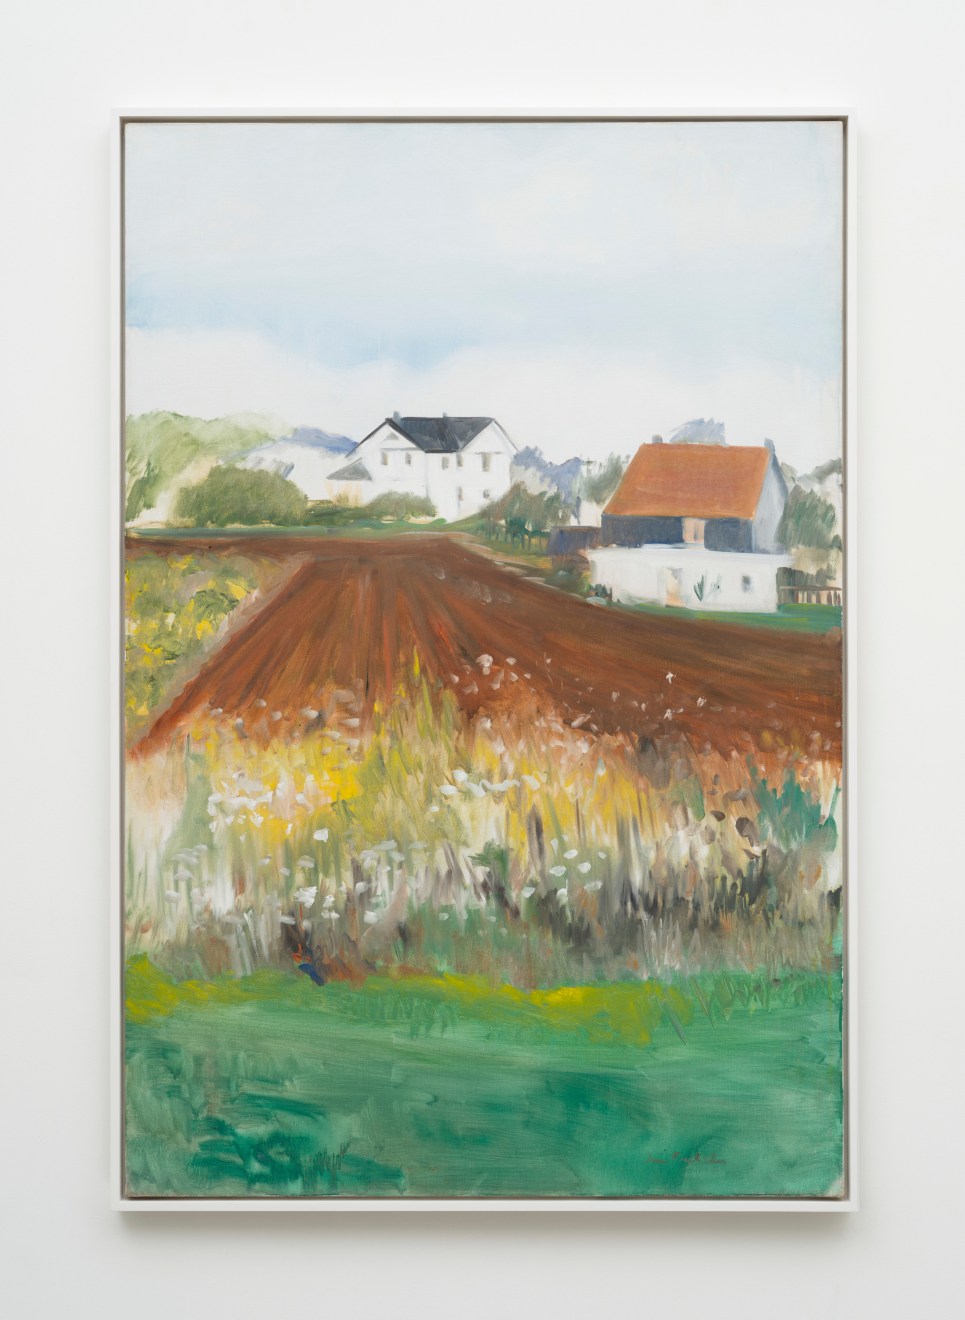 Jane Freilicher, Landscape with Ploughed Potato Field, 1966